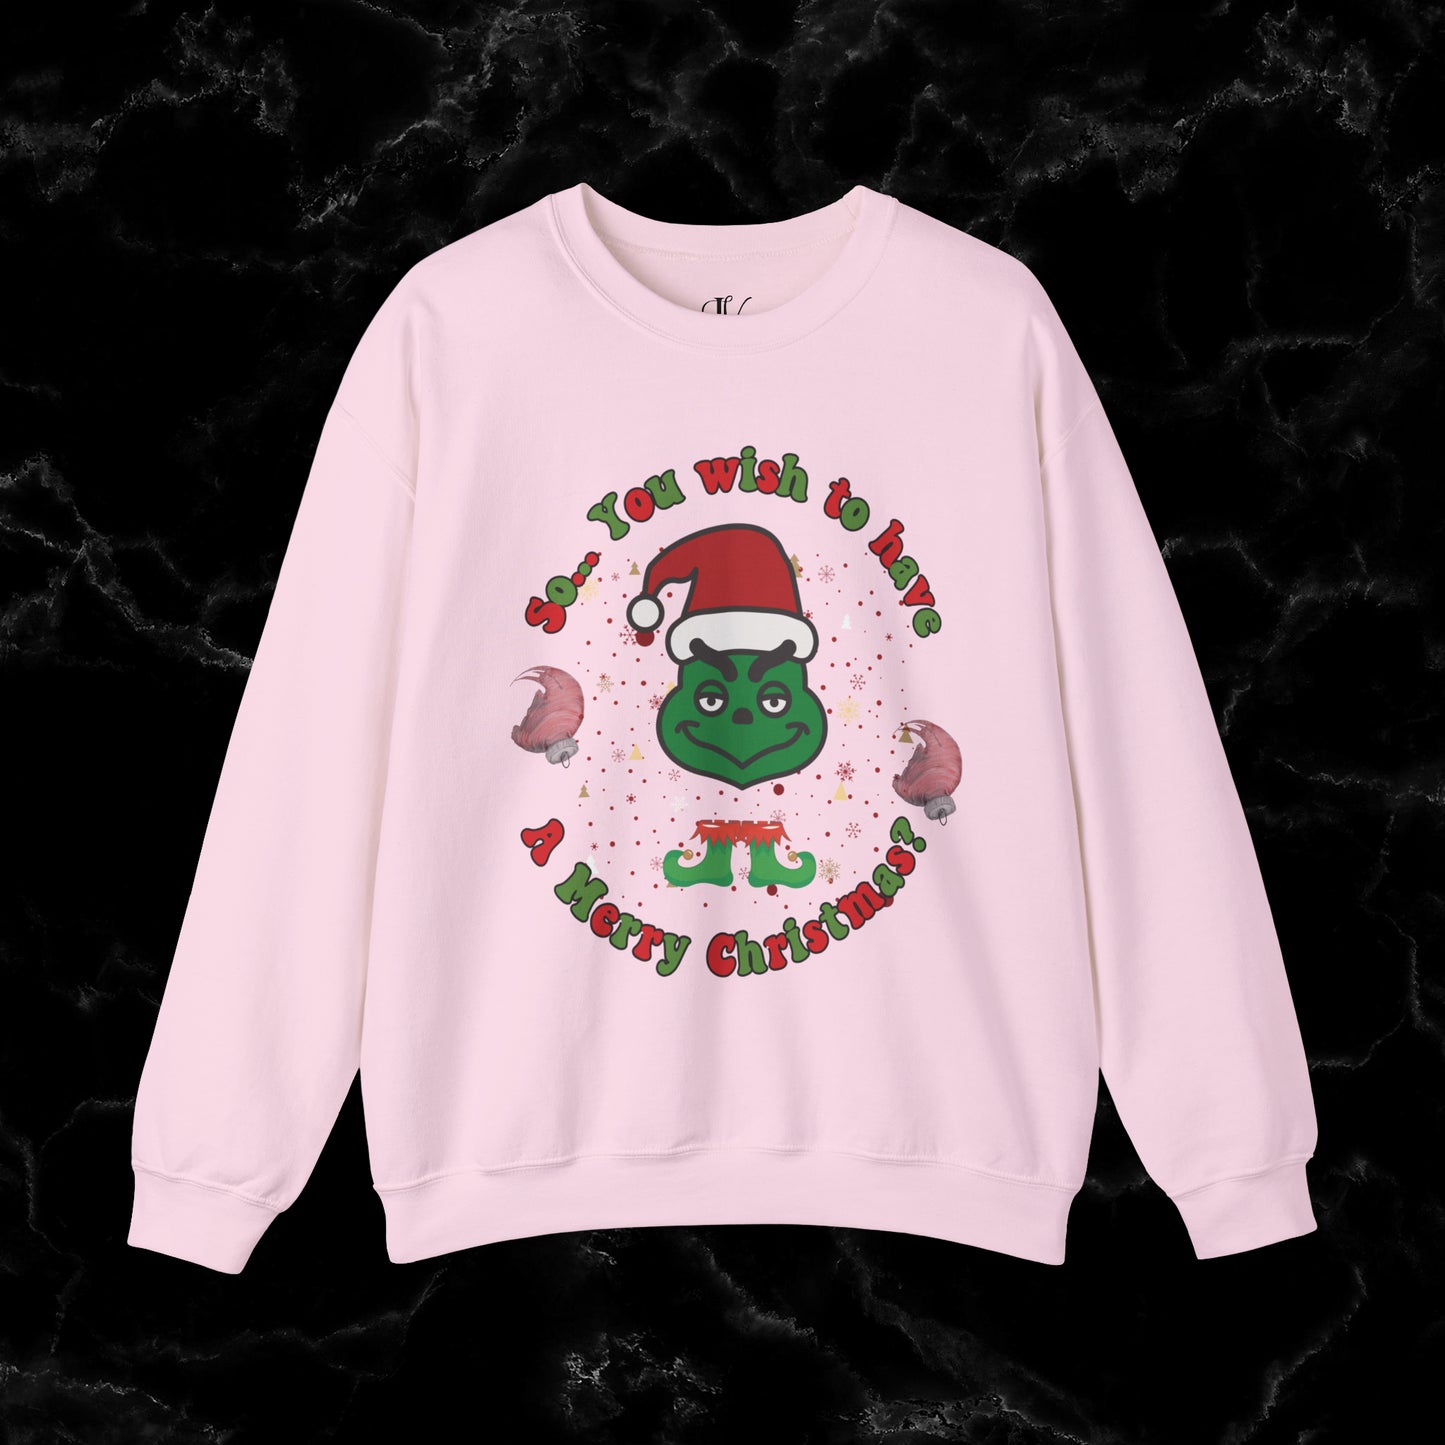 So You Wish To Have Merry Christmas Grinch Sweatshirt - Funny Grinchmas Gift Sweatshirt S Light Pink 